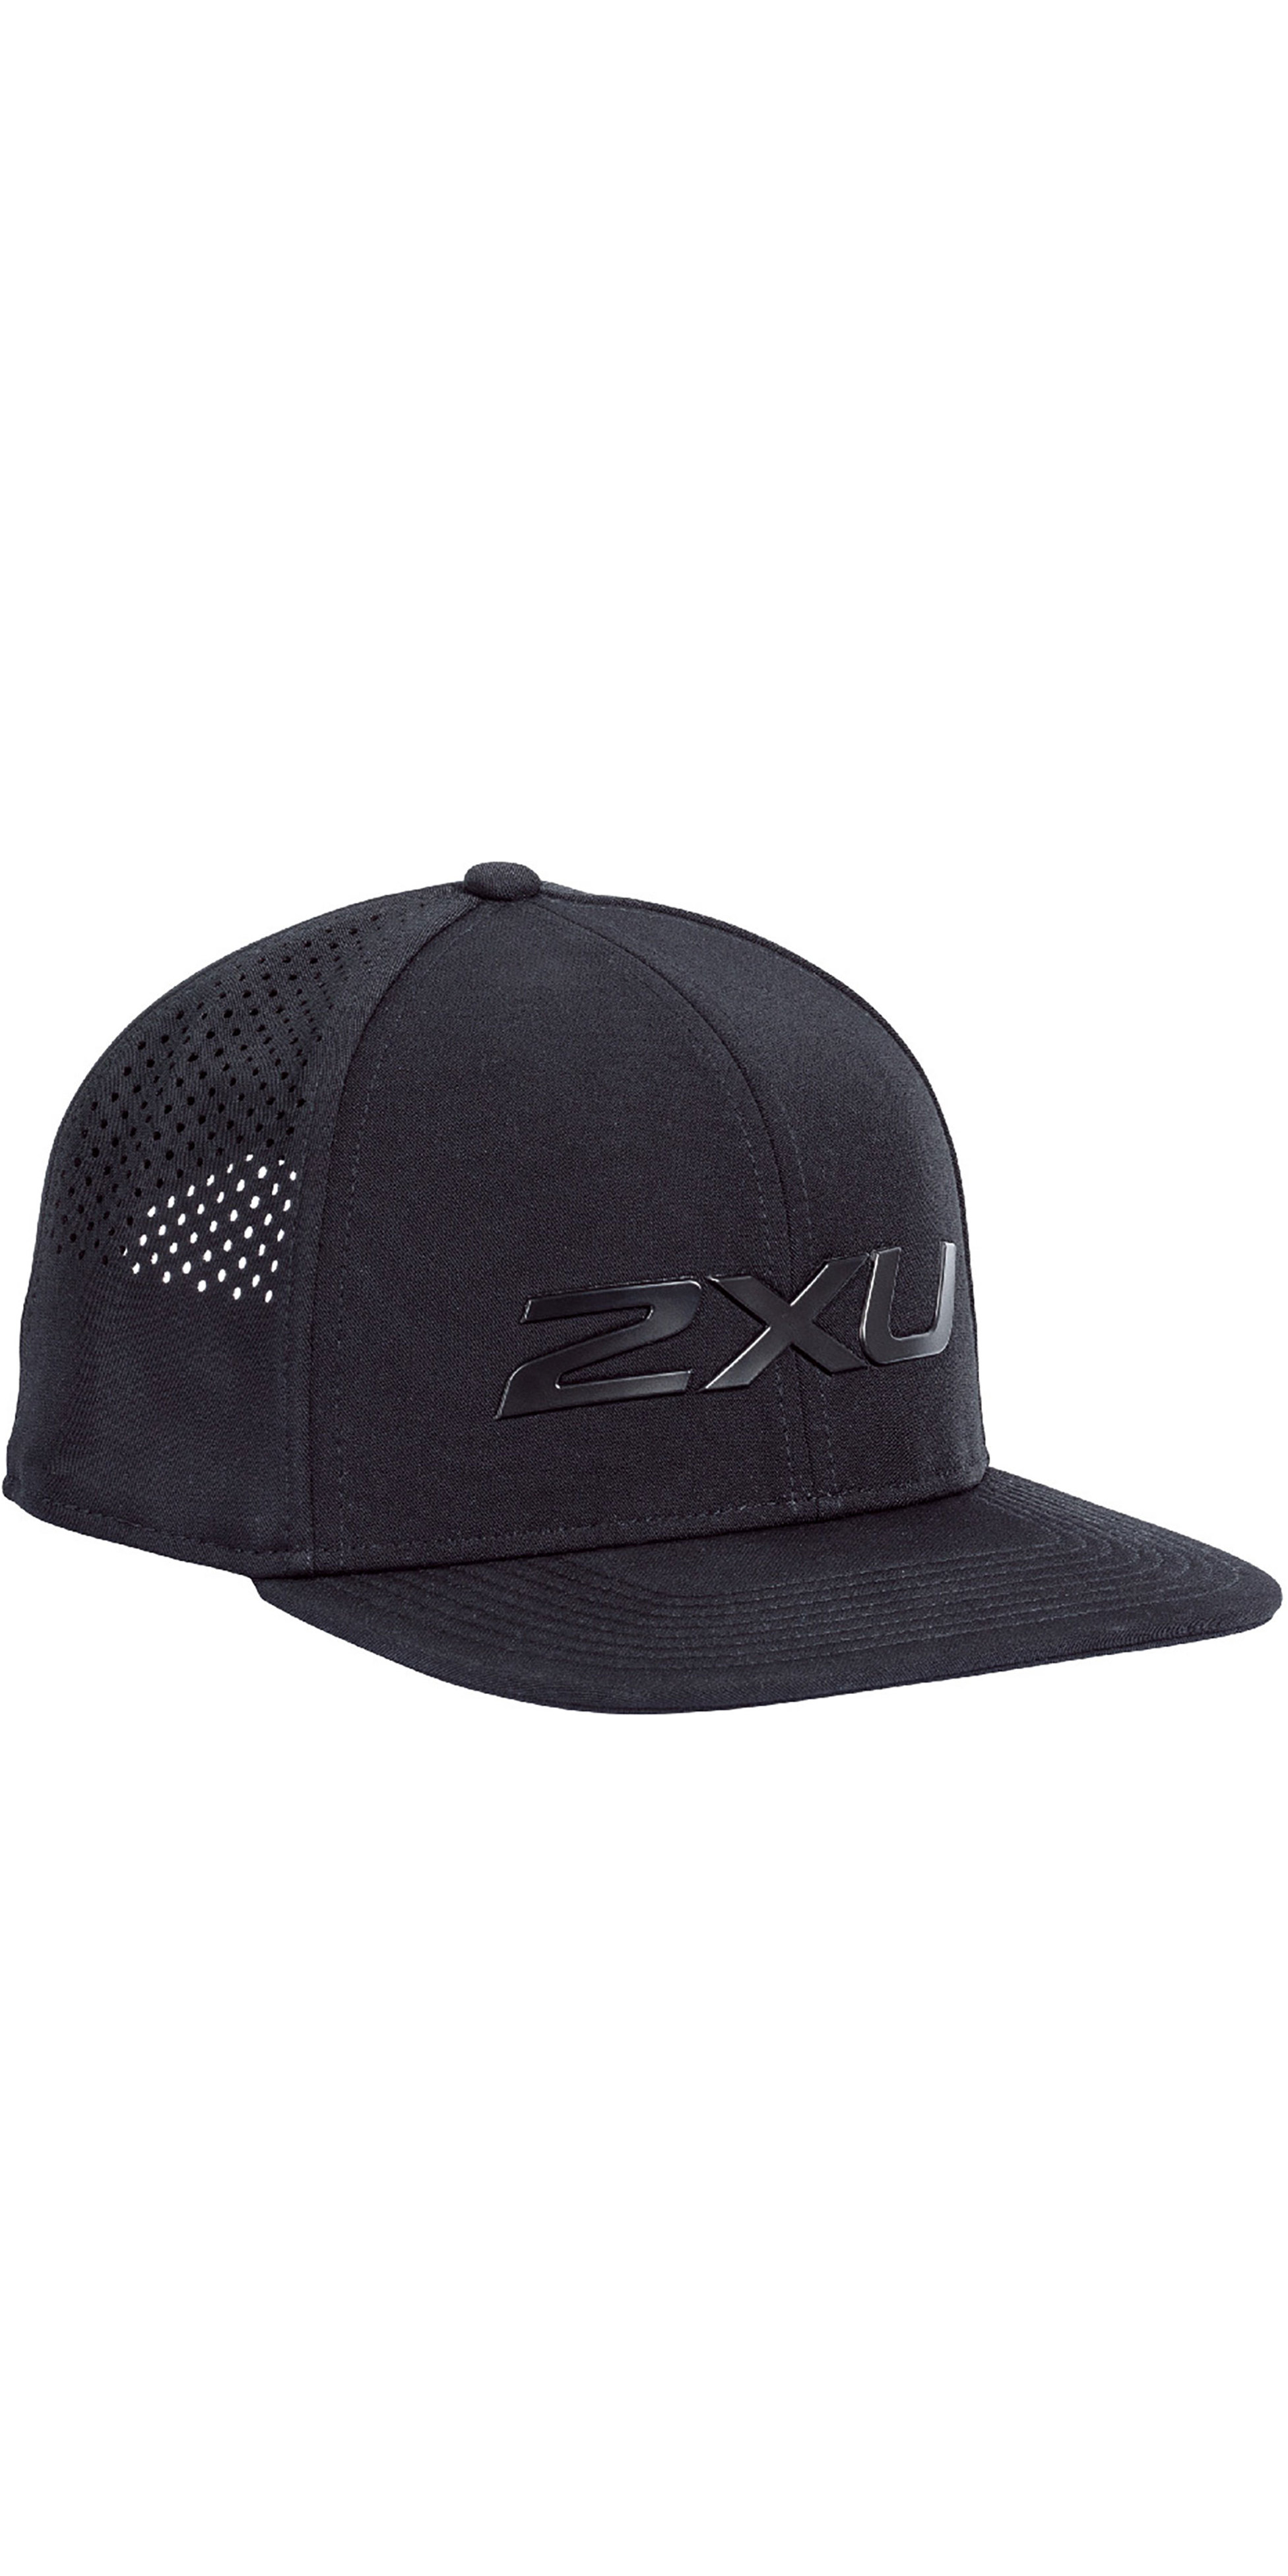 2019 2XU Trucker Cap Black UQ5359f - Sailing - Accessories - Gloves & Hats | Watersports Outlet